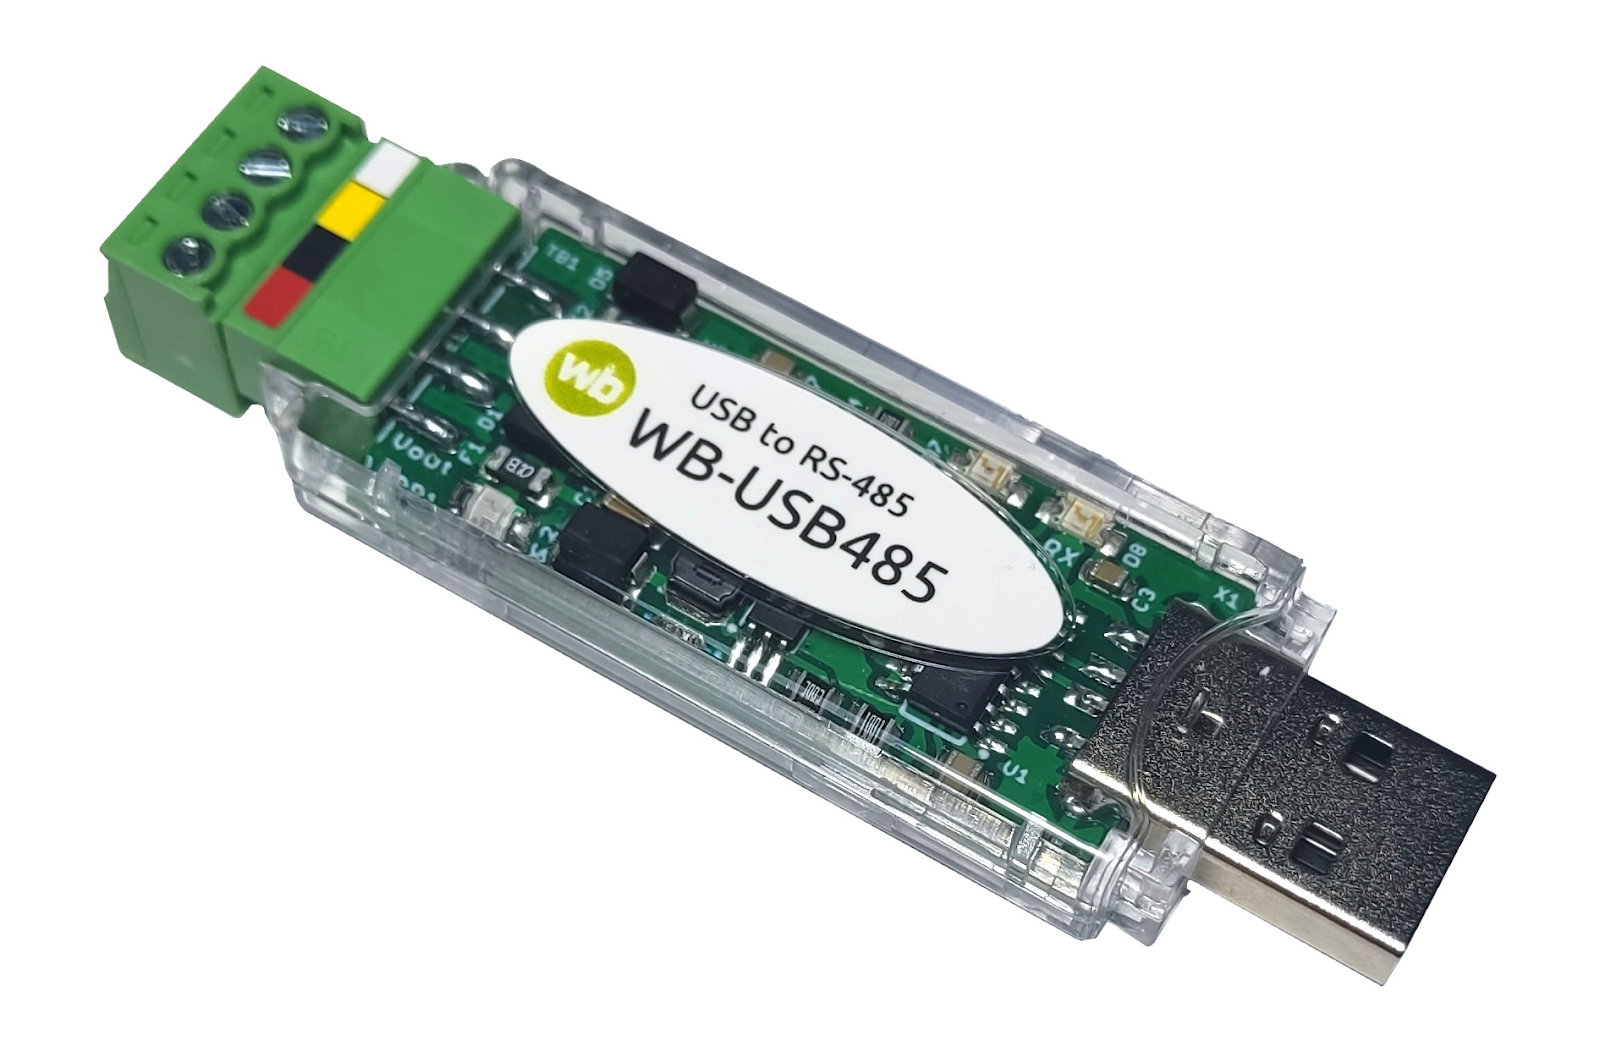 WB-USB485 — конвертер USB в RS-485 с выходом питания 12 В